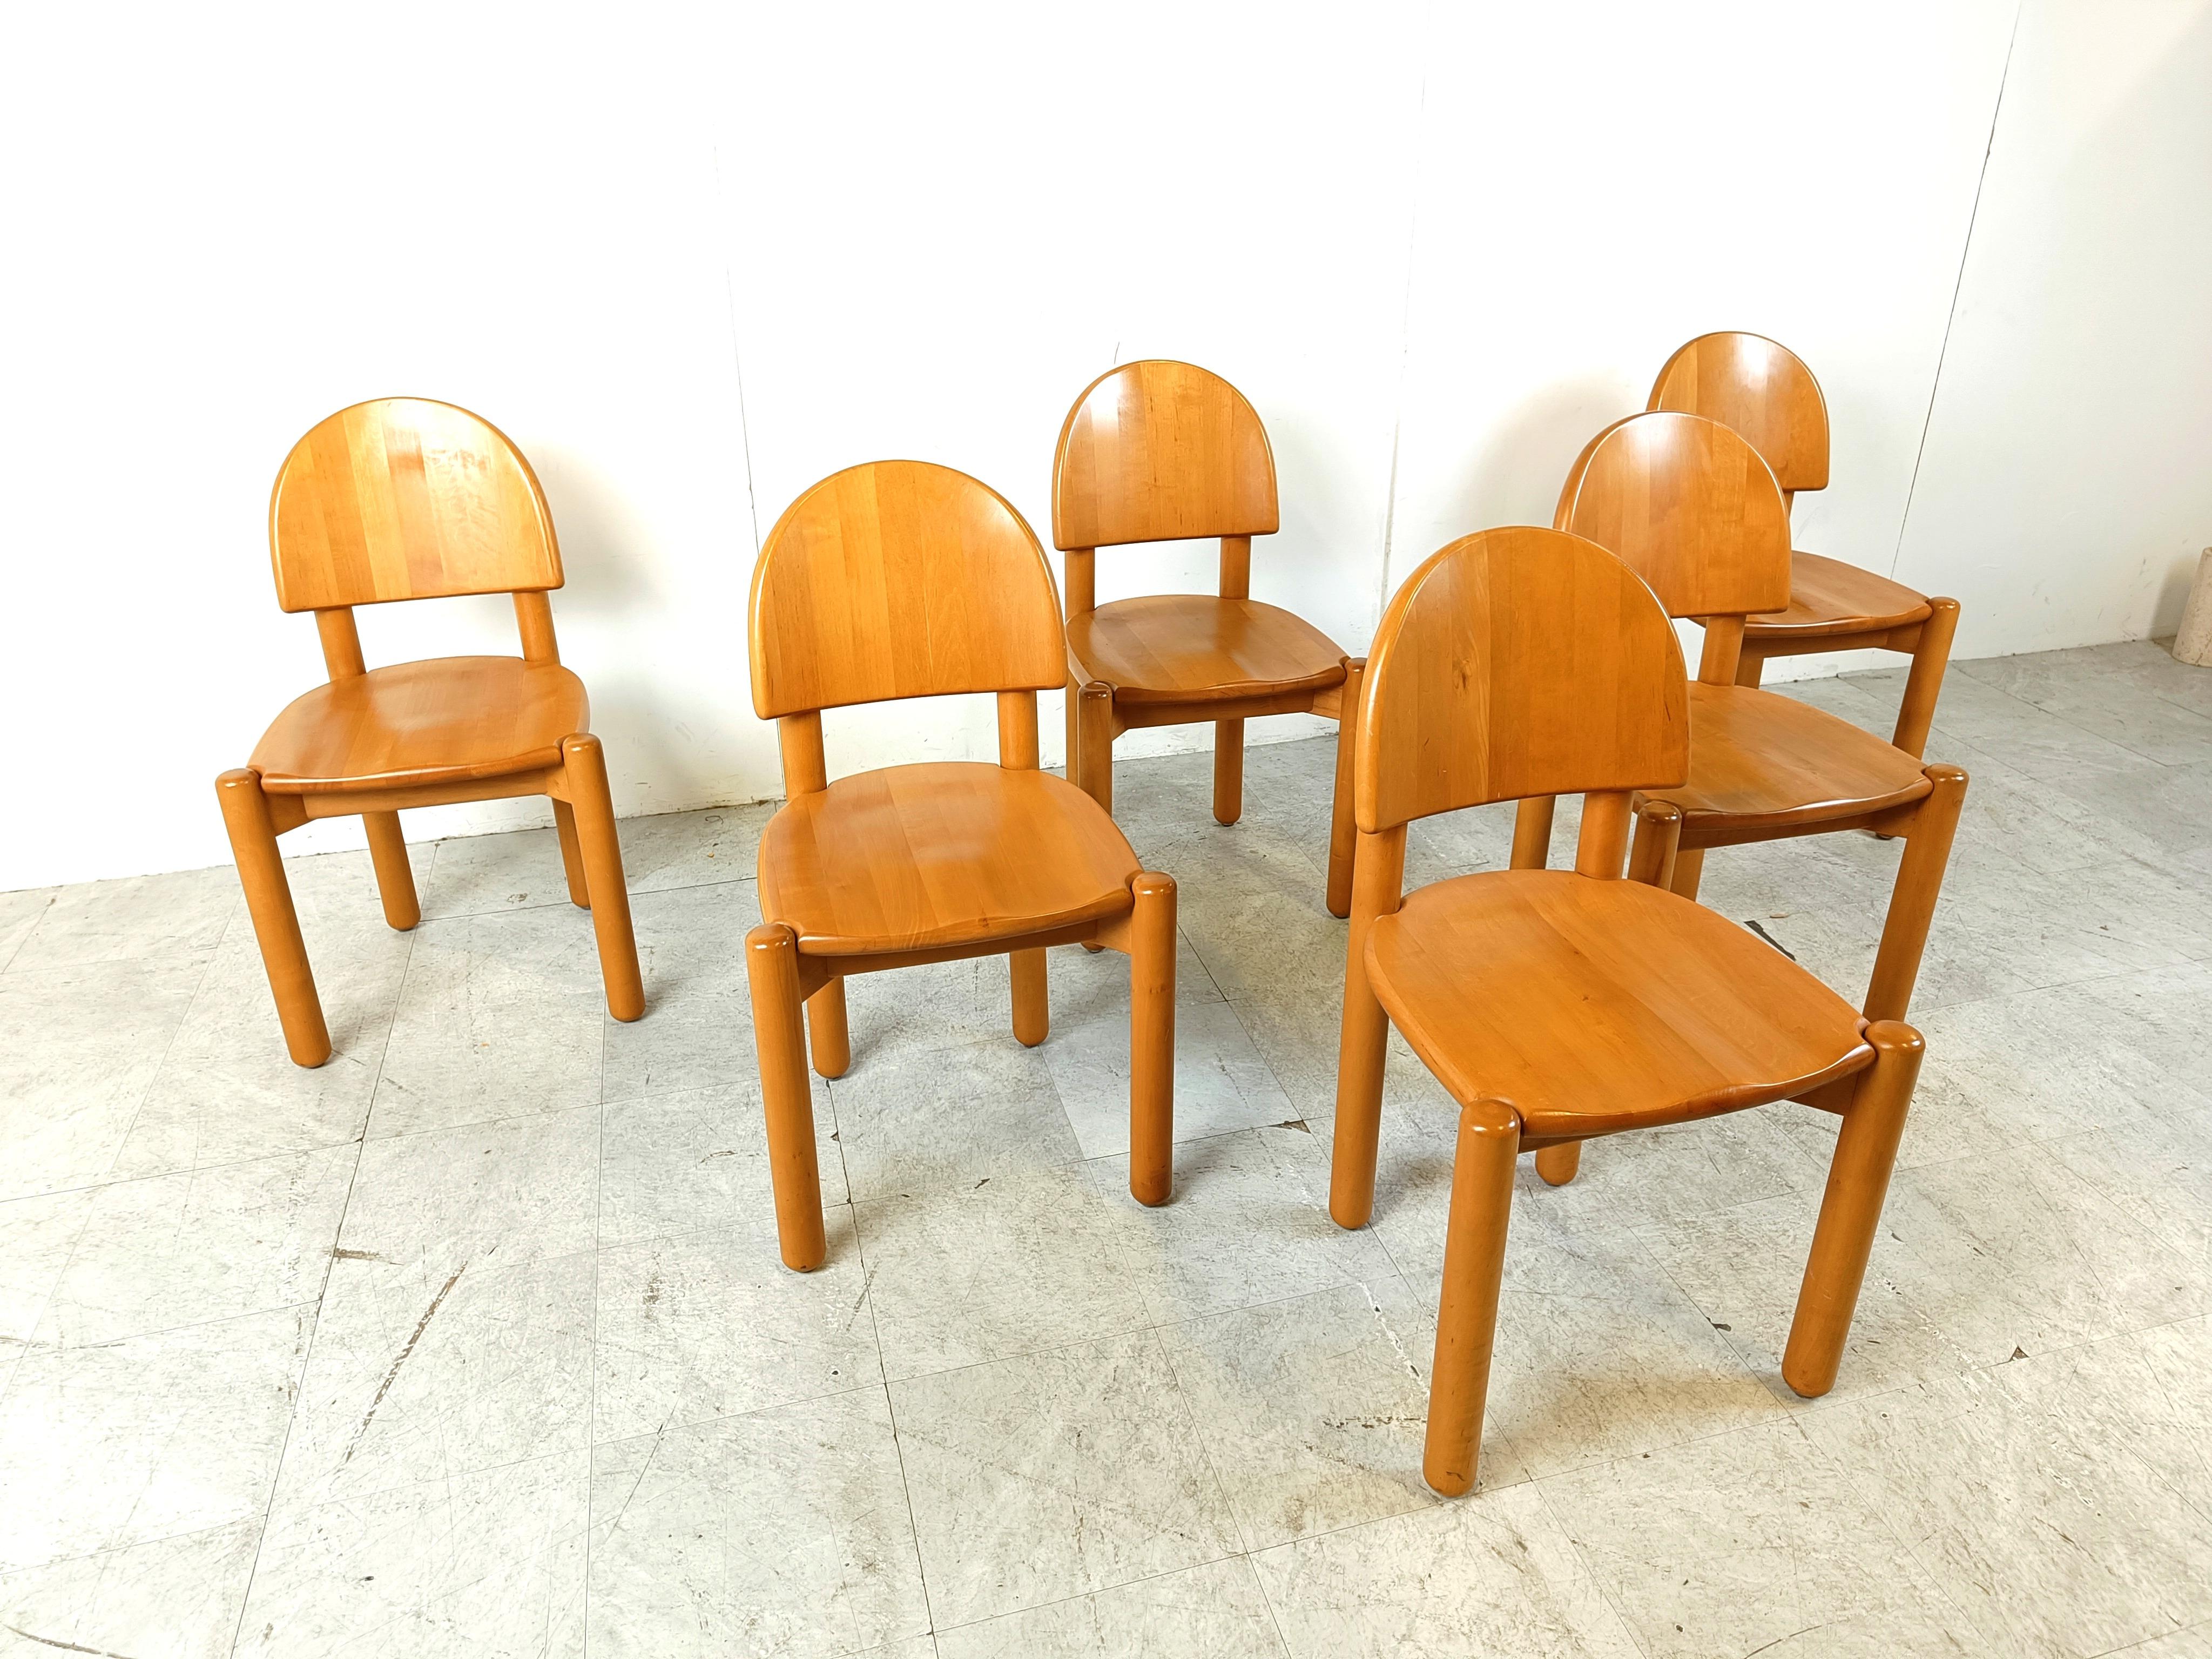 Late 20th Century Rainer Daumiller pine wood dining chairs for Hirtshals Savvaerk set of 6, 1980s